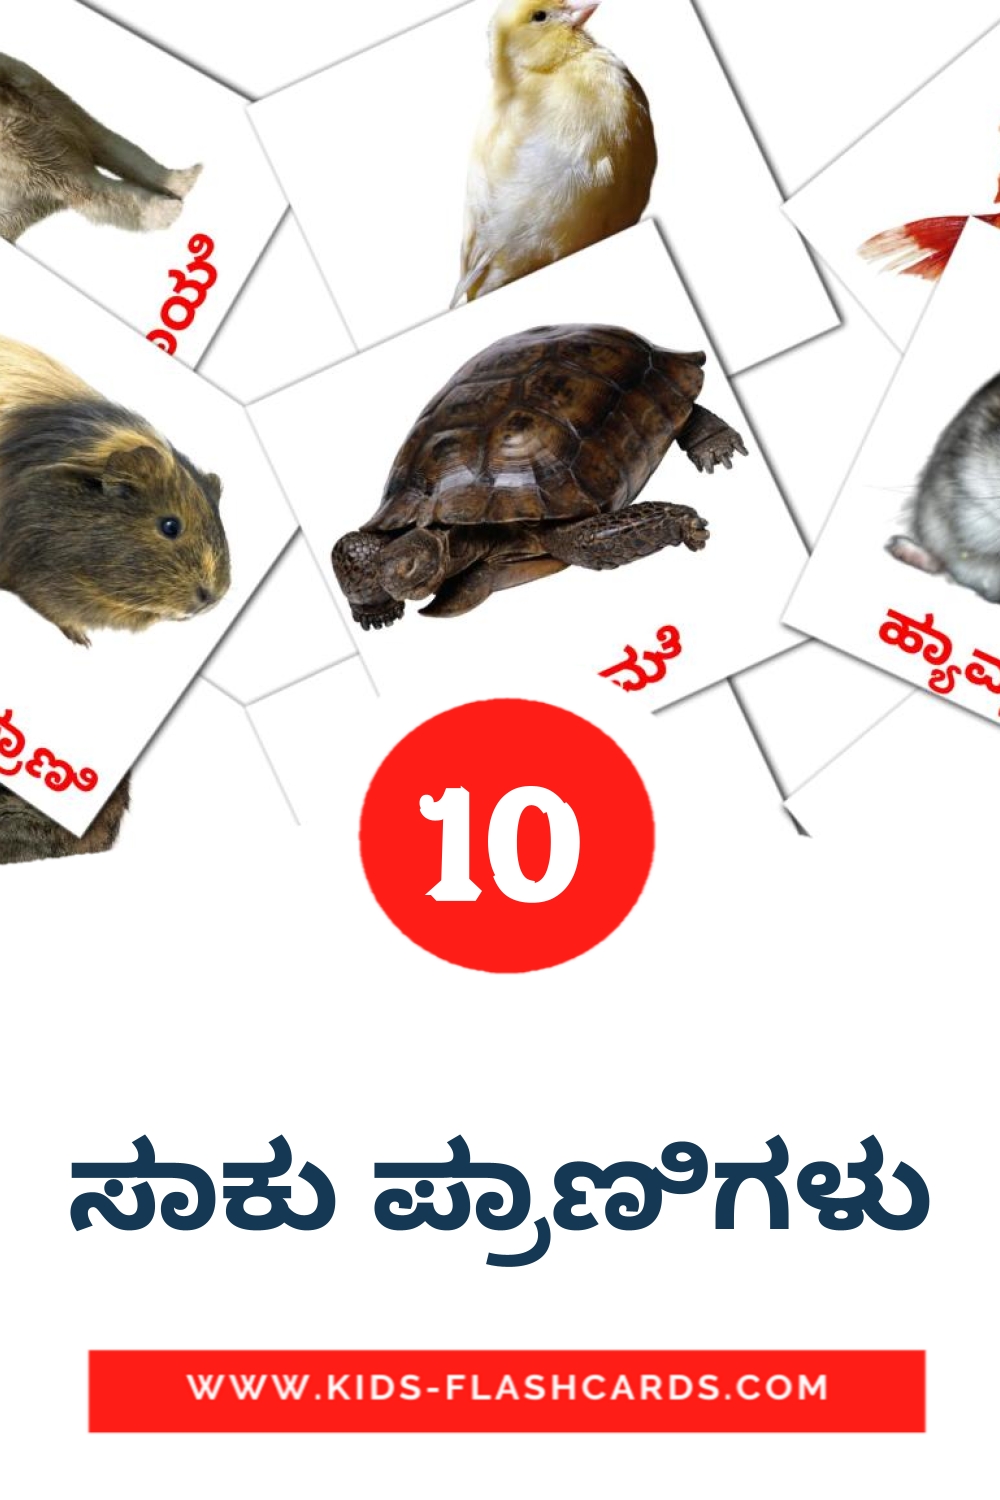 10 ಸಾಕು ಪ್ರಾಣಿಗಳು fotokaarten voor kleuters in het kannada